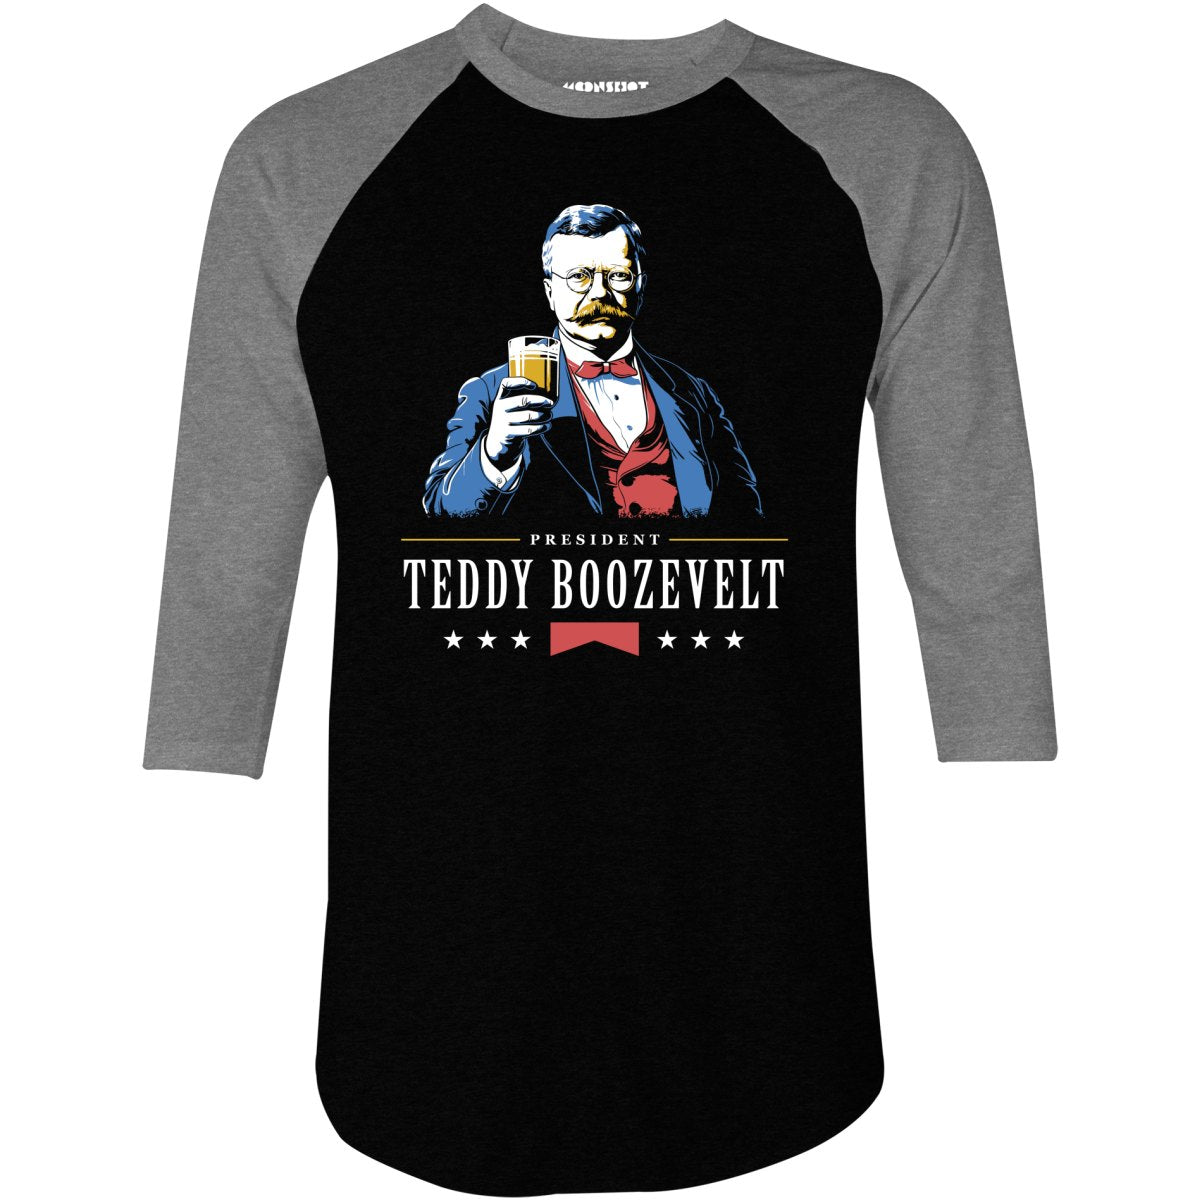 President Teddy Boozevelt - 3/4 Sleeve Raglan T-Shirt